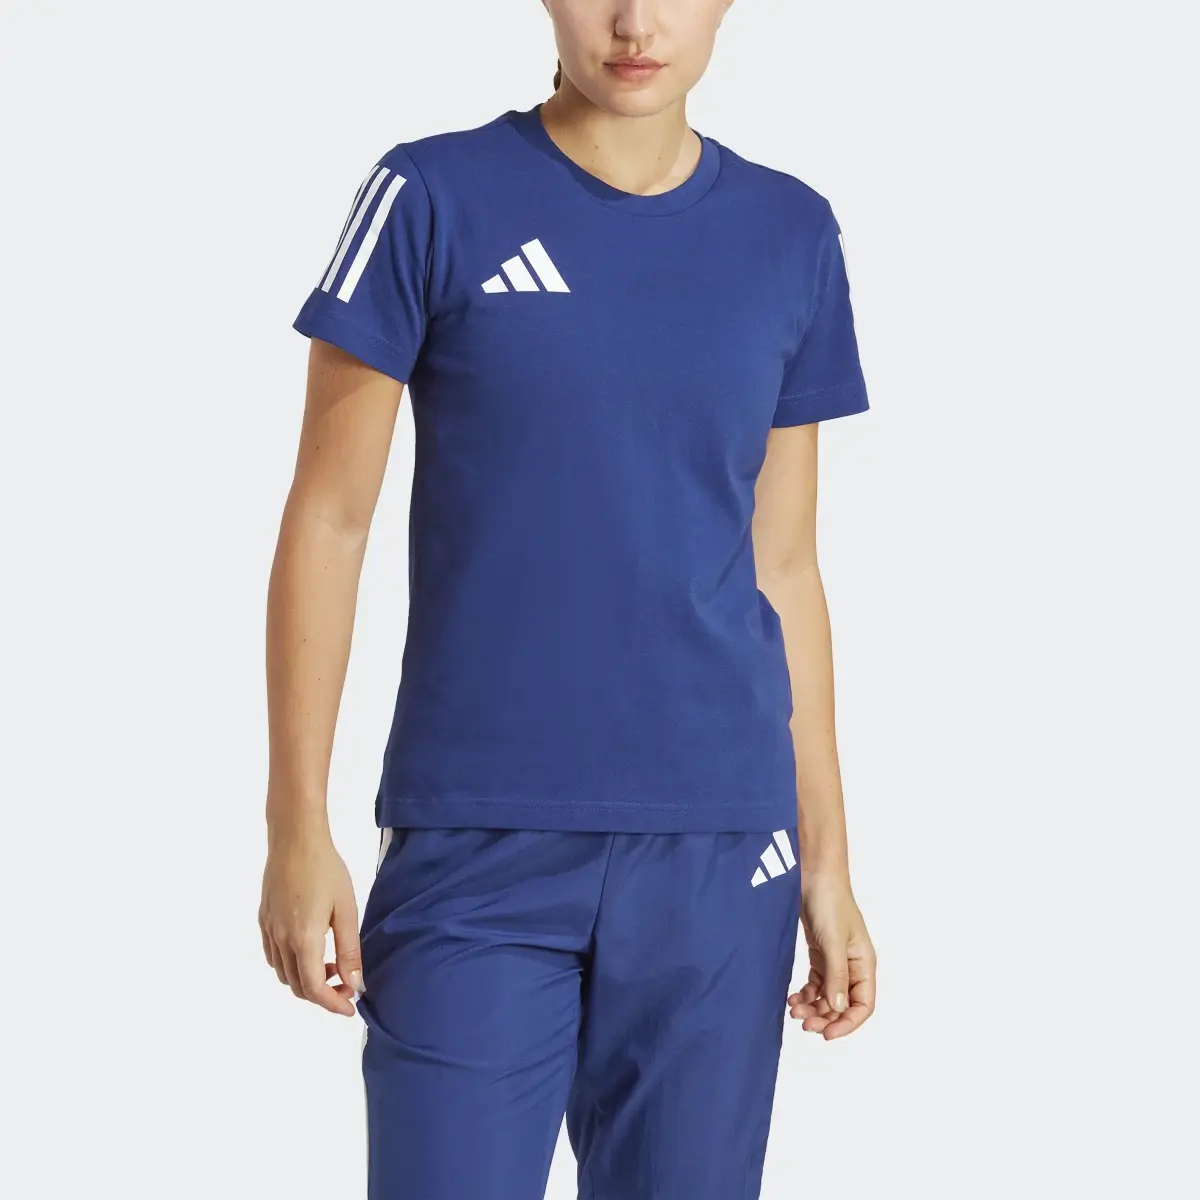 Adidas France Cotton Graphic T-Shirt. 1